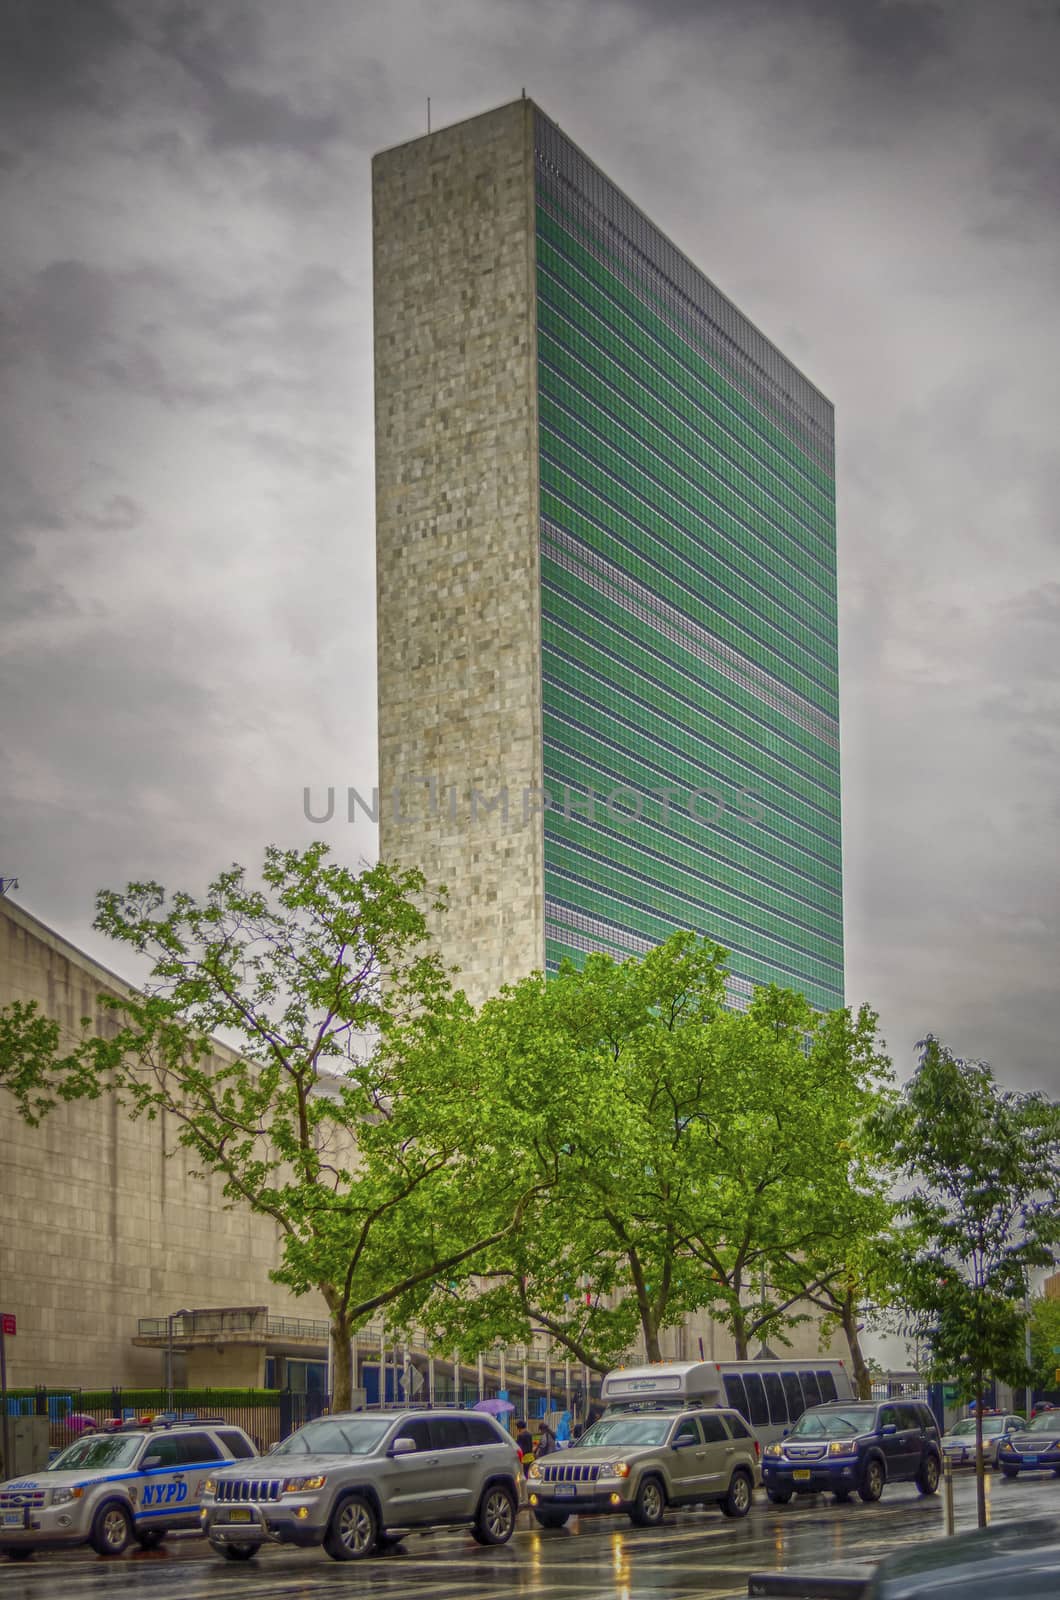 United Nations Headquarters by marcorubino